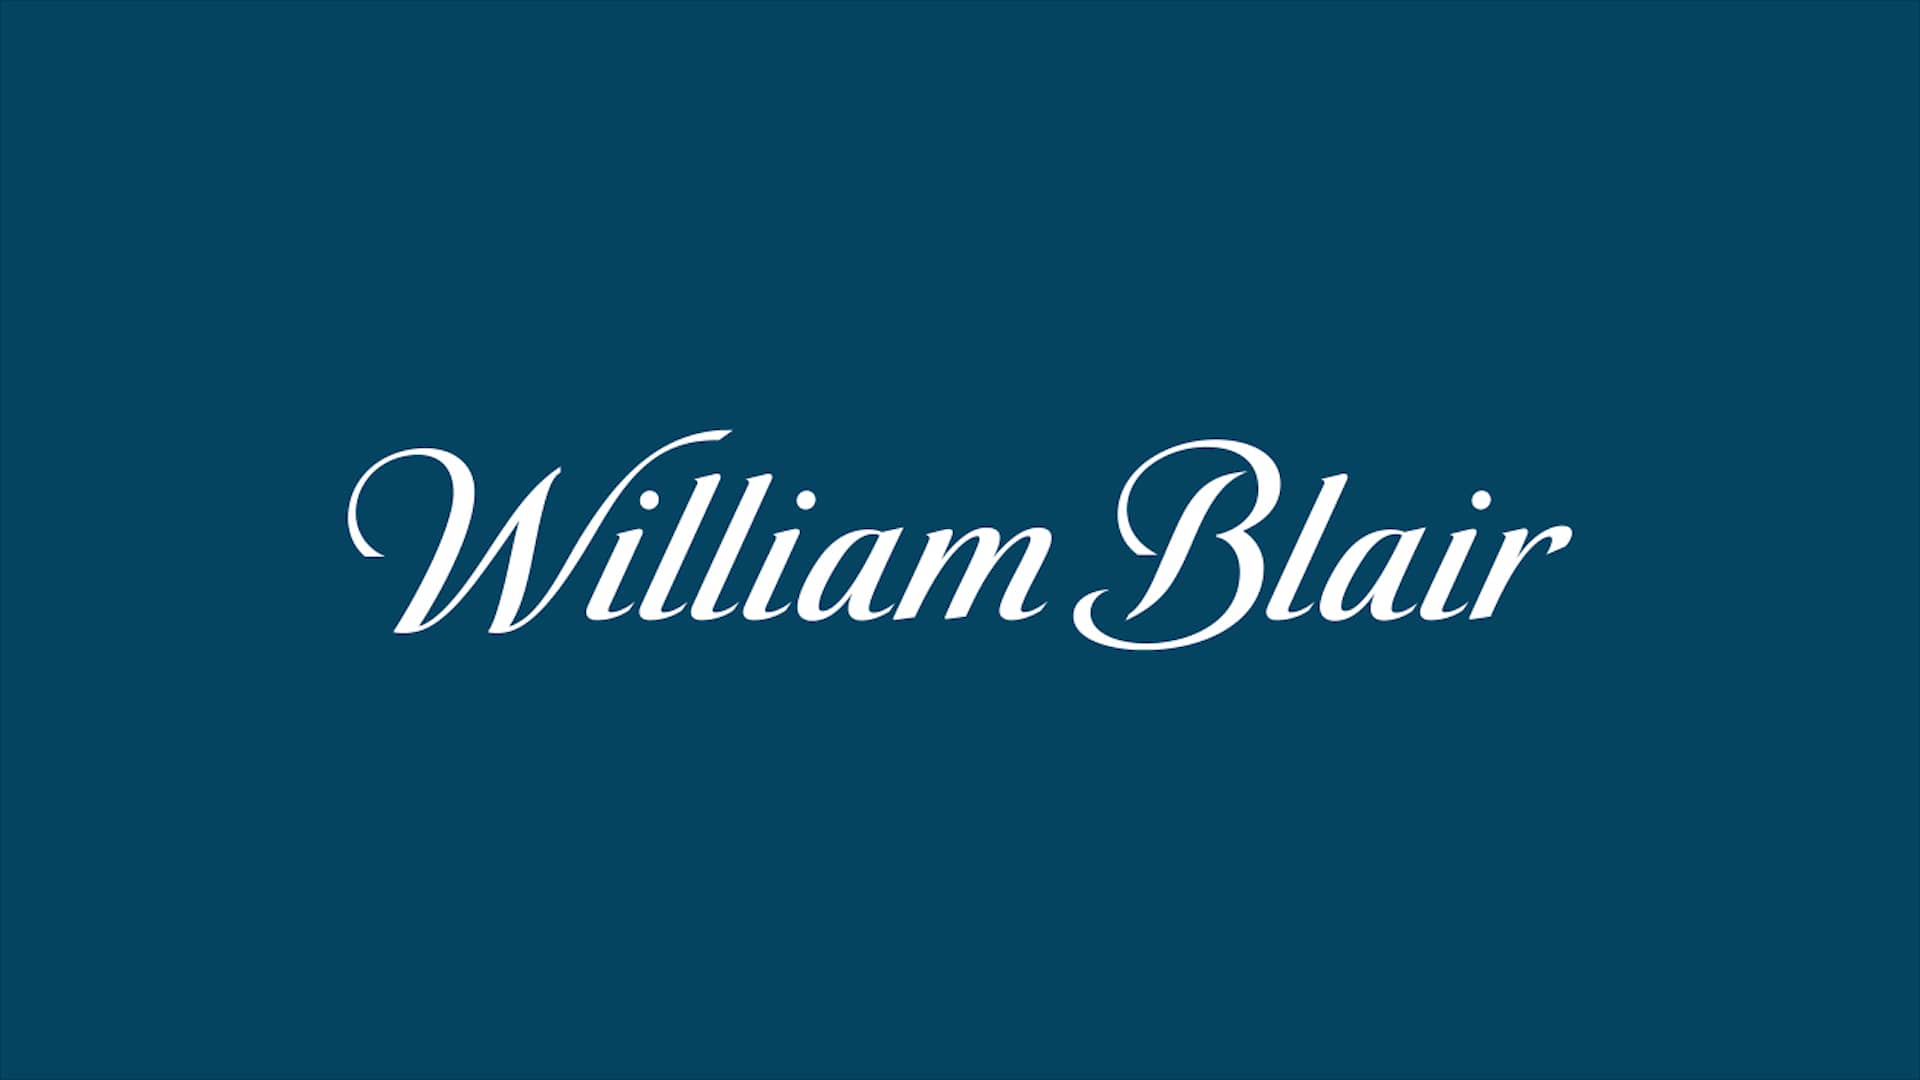 Blair Logo - William Blair logo. Gorton Community Center